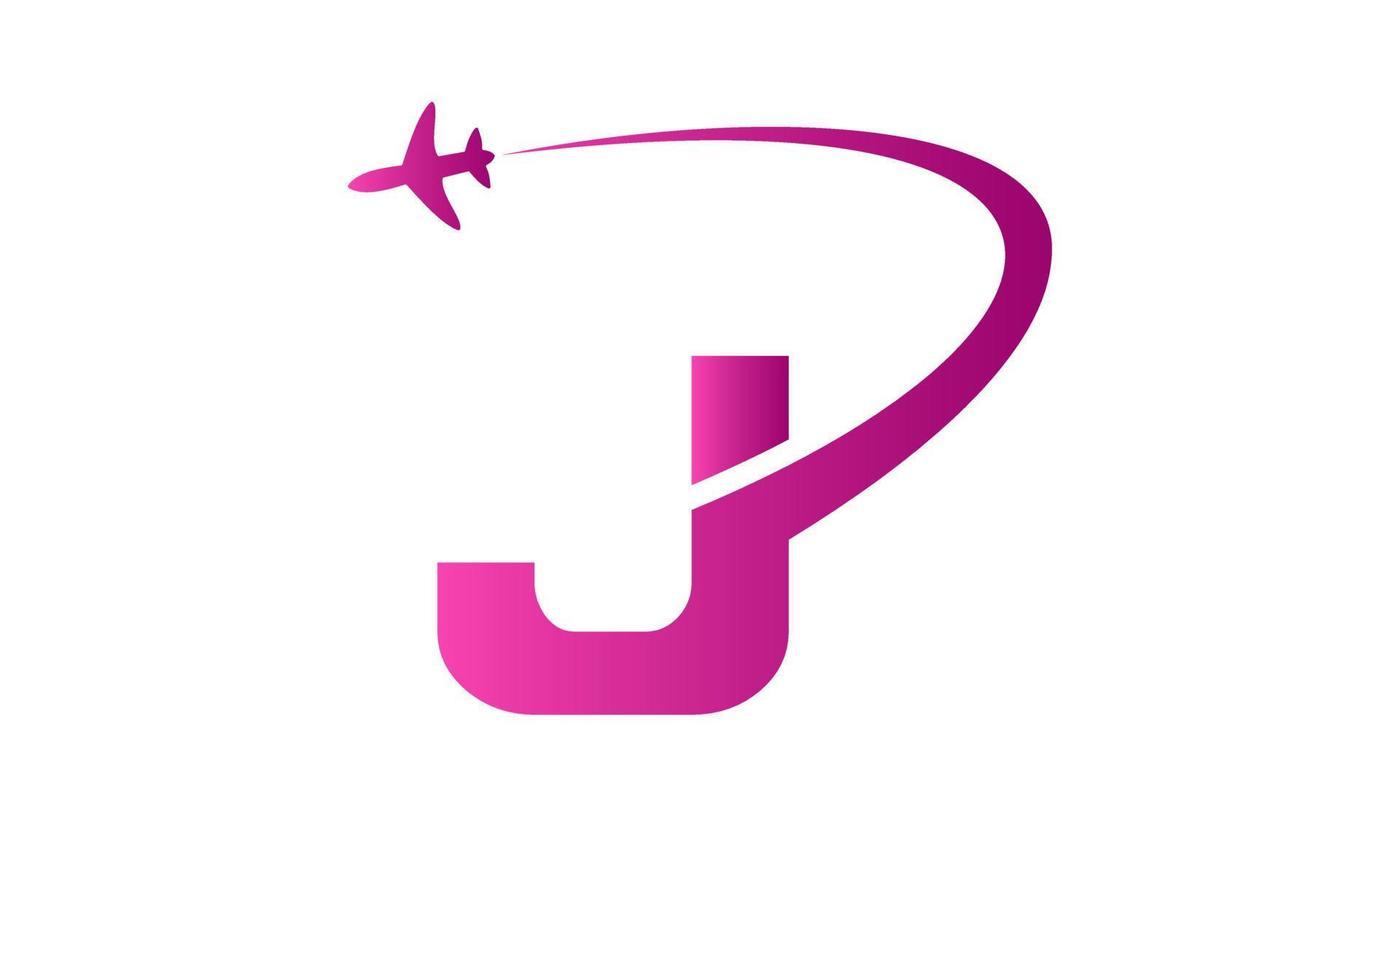 Letter J Travel Logo Design Concept With Flying Airplane Symbol vector